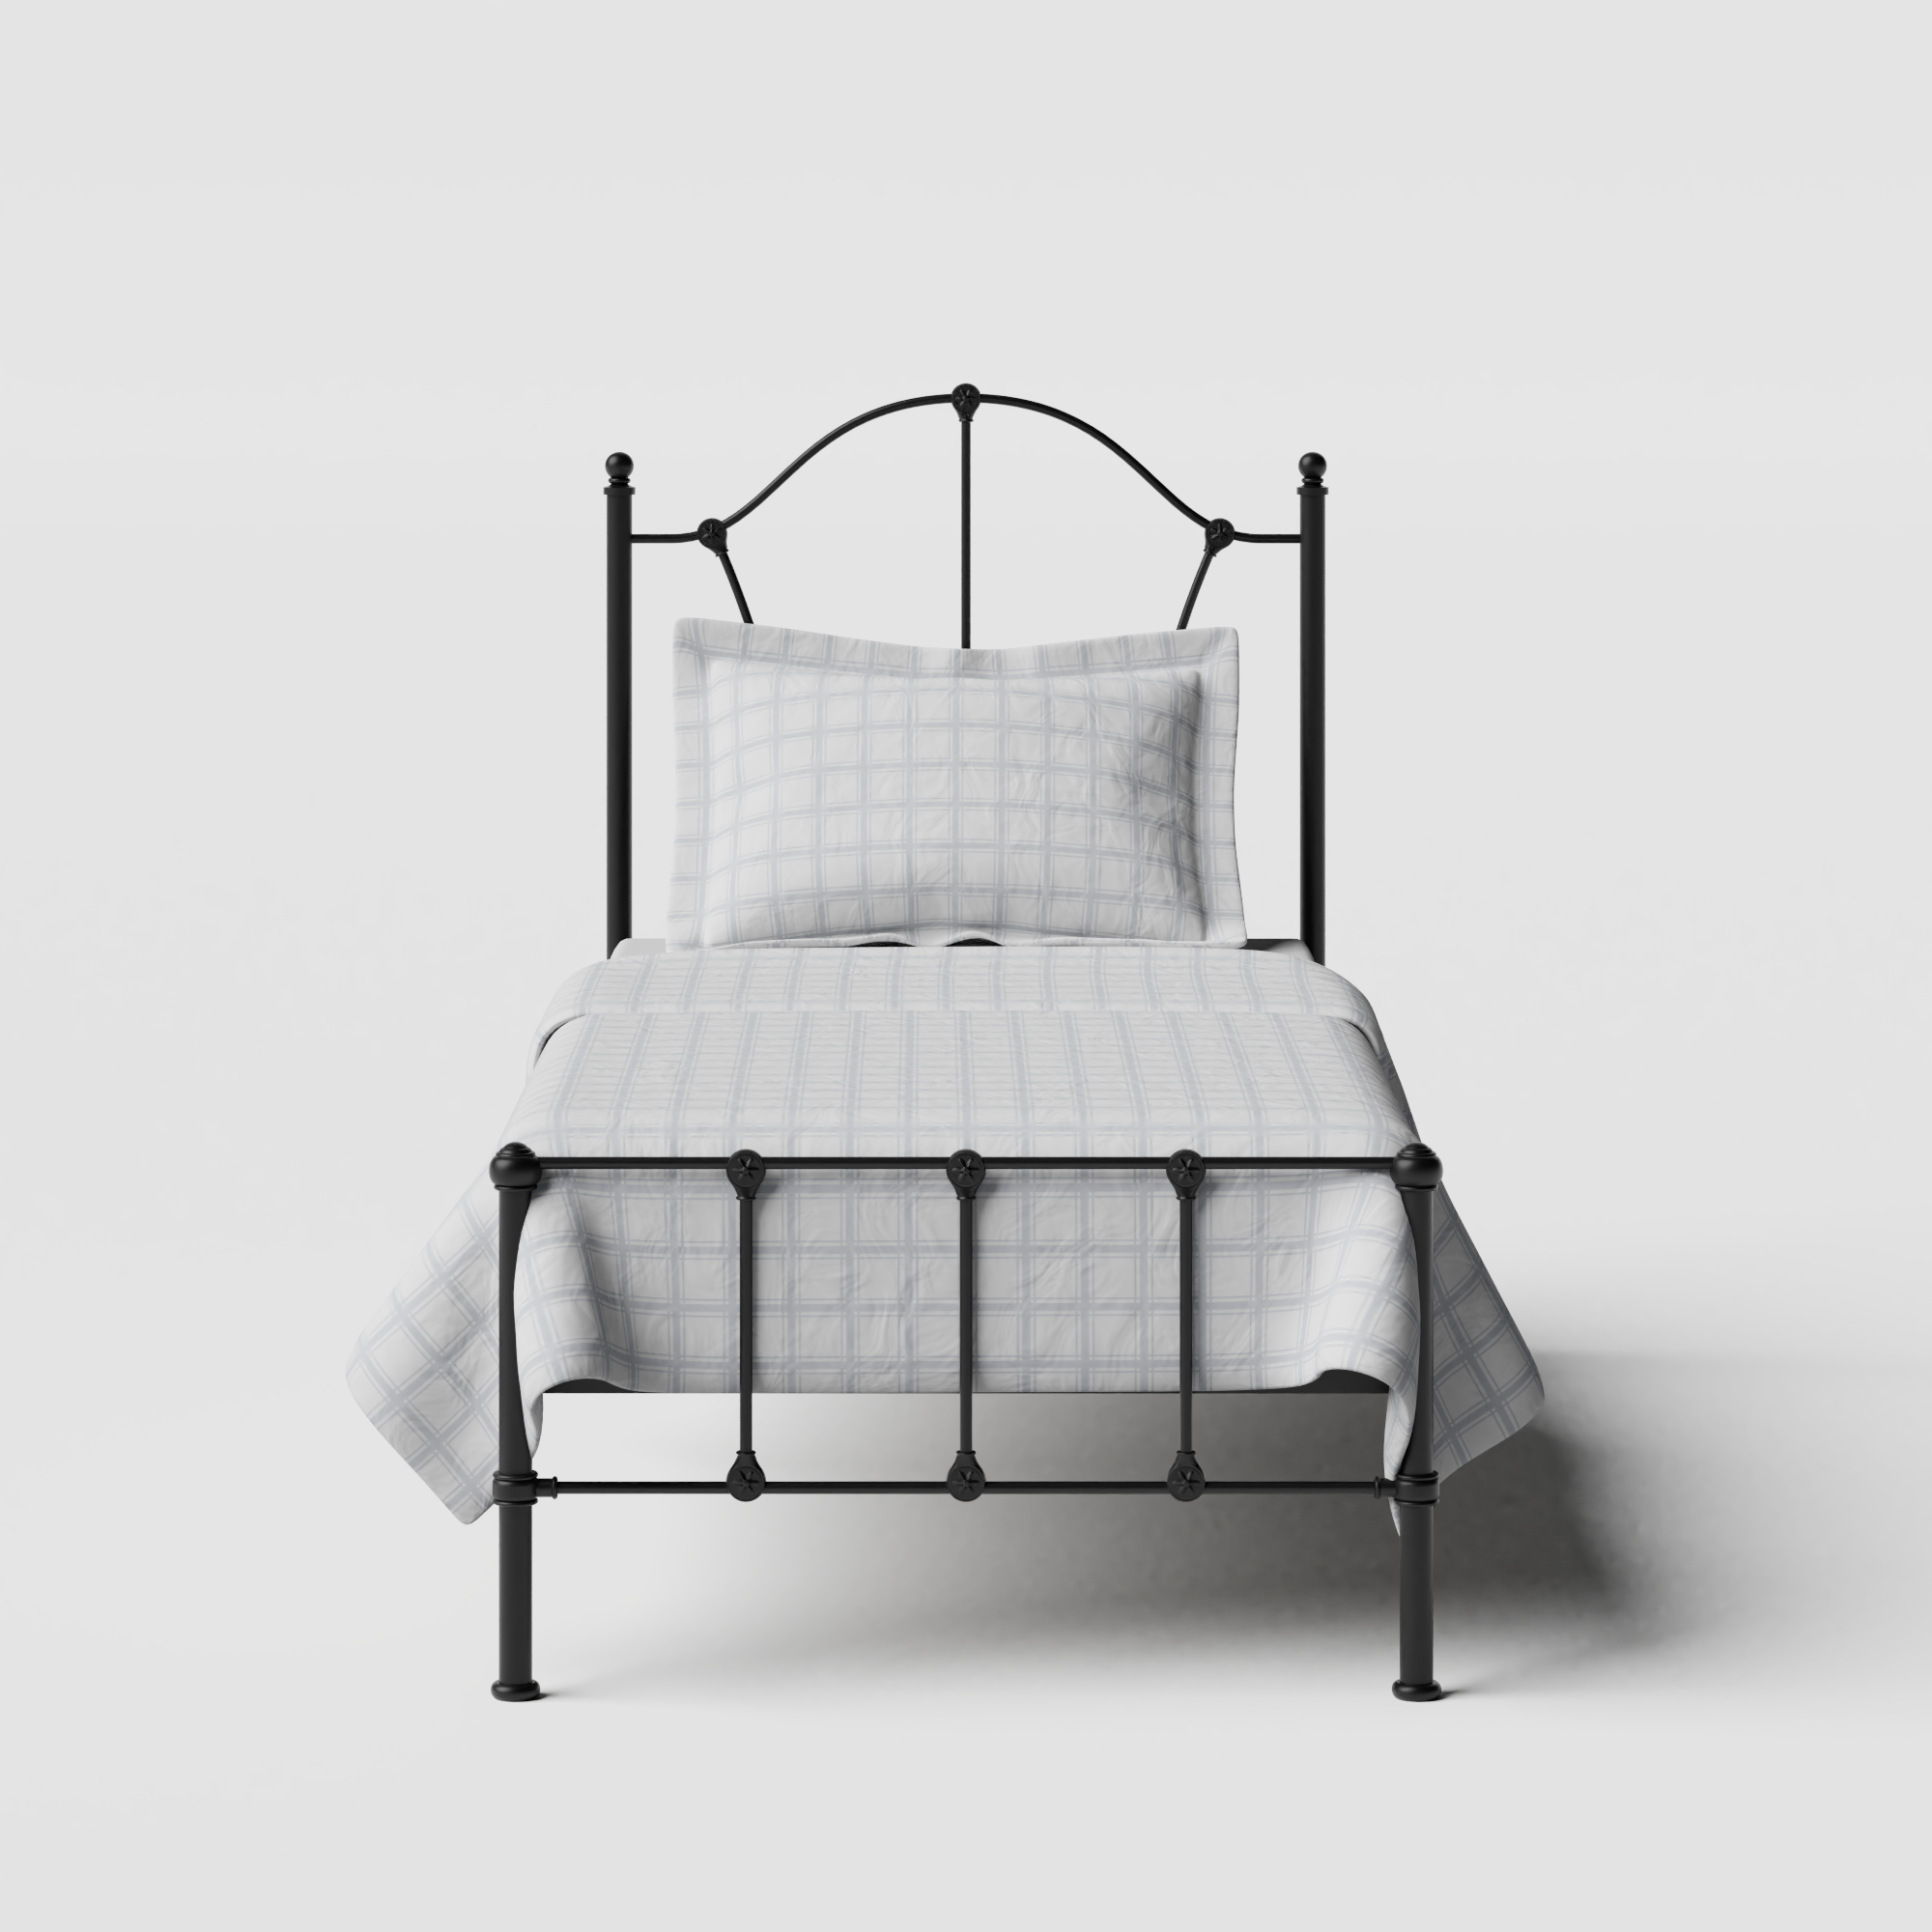 Claudia iron/metal single bed in black